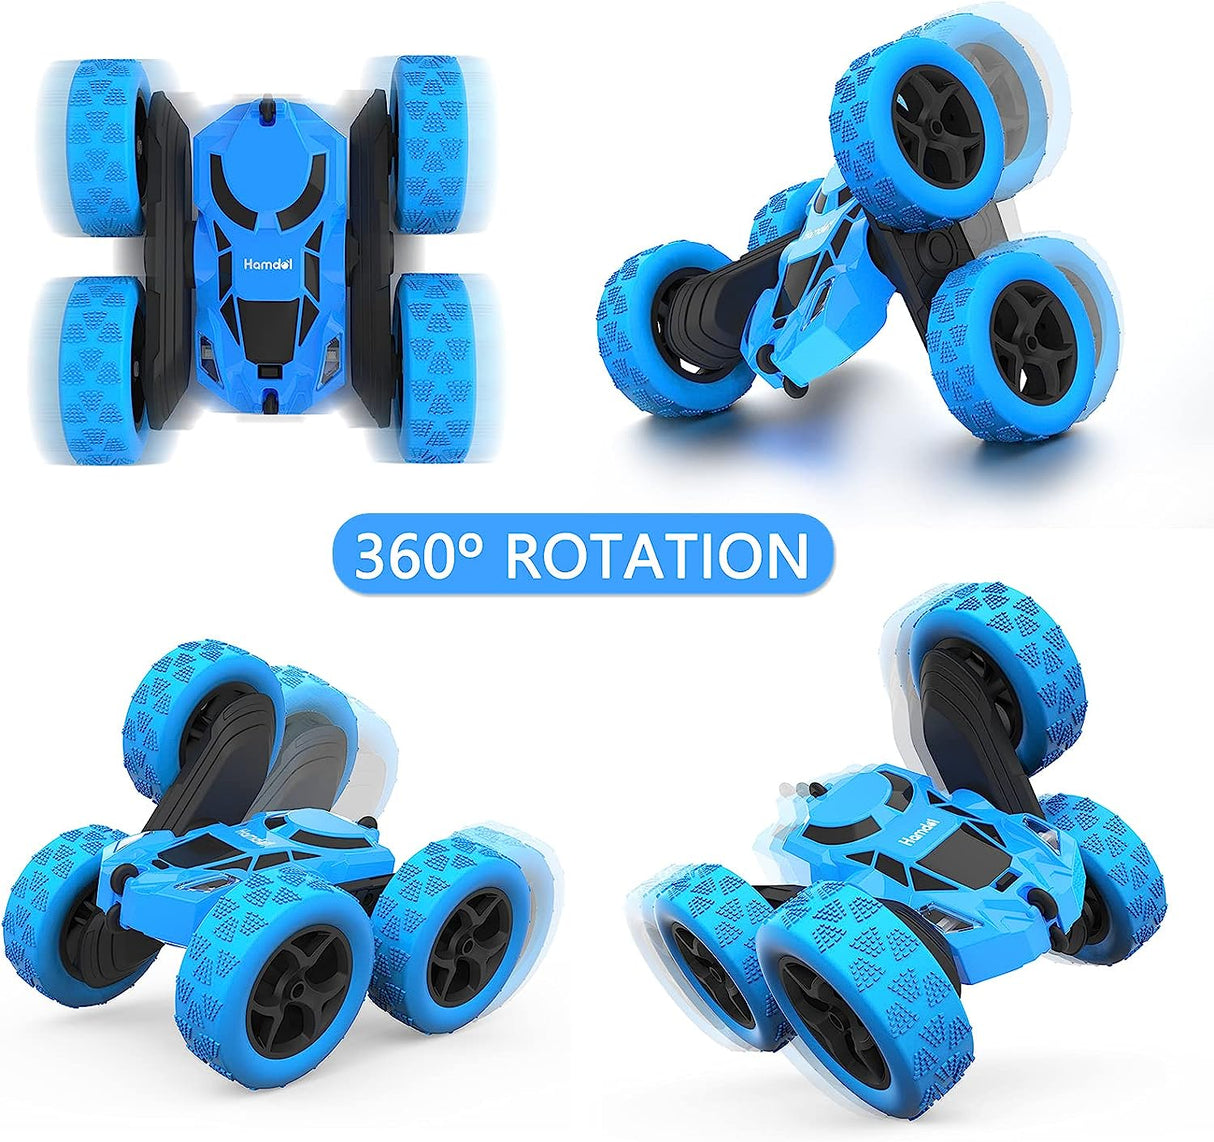 Radiostyrd Stuntbil 360° Rotation - Sparklar